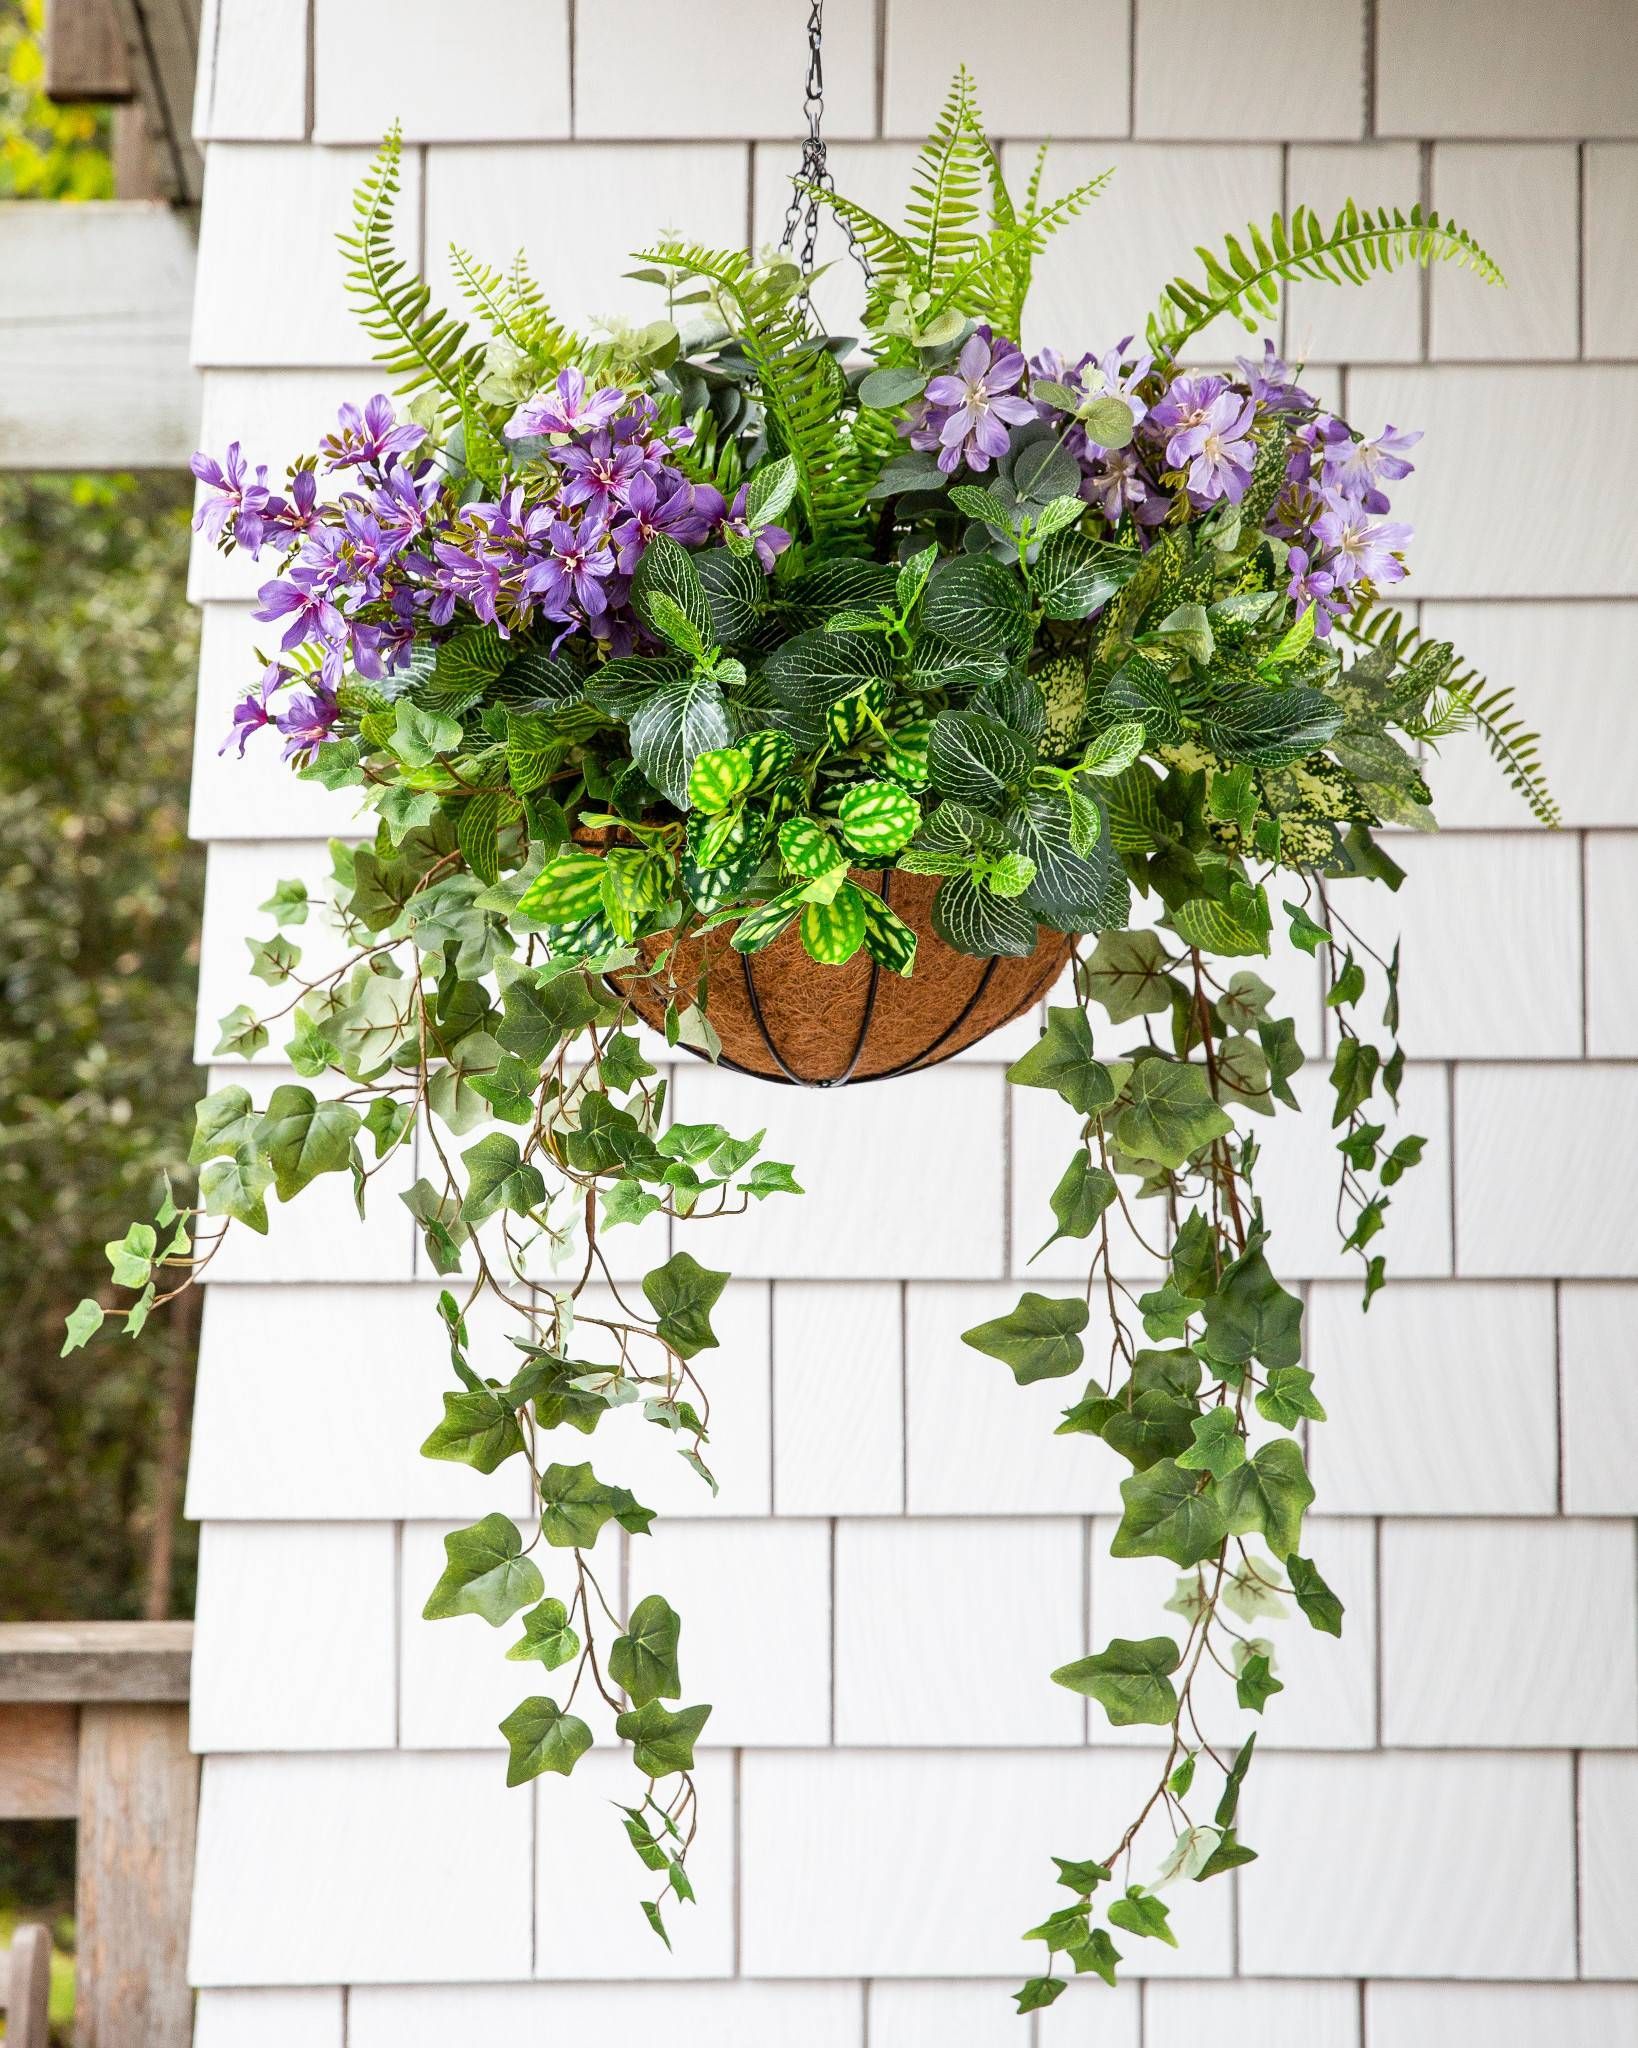 Floral Fern Hanging Basket -   18 plants Flowers in hanging baskets ideas